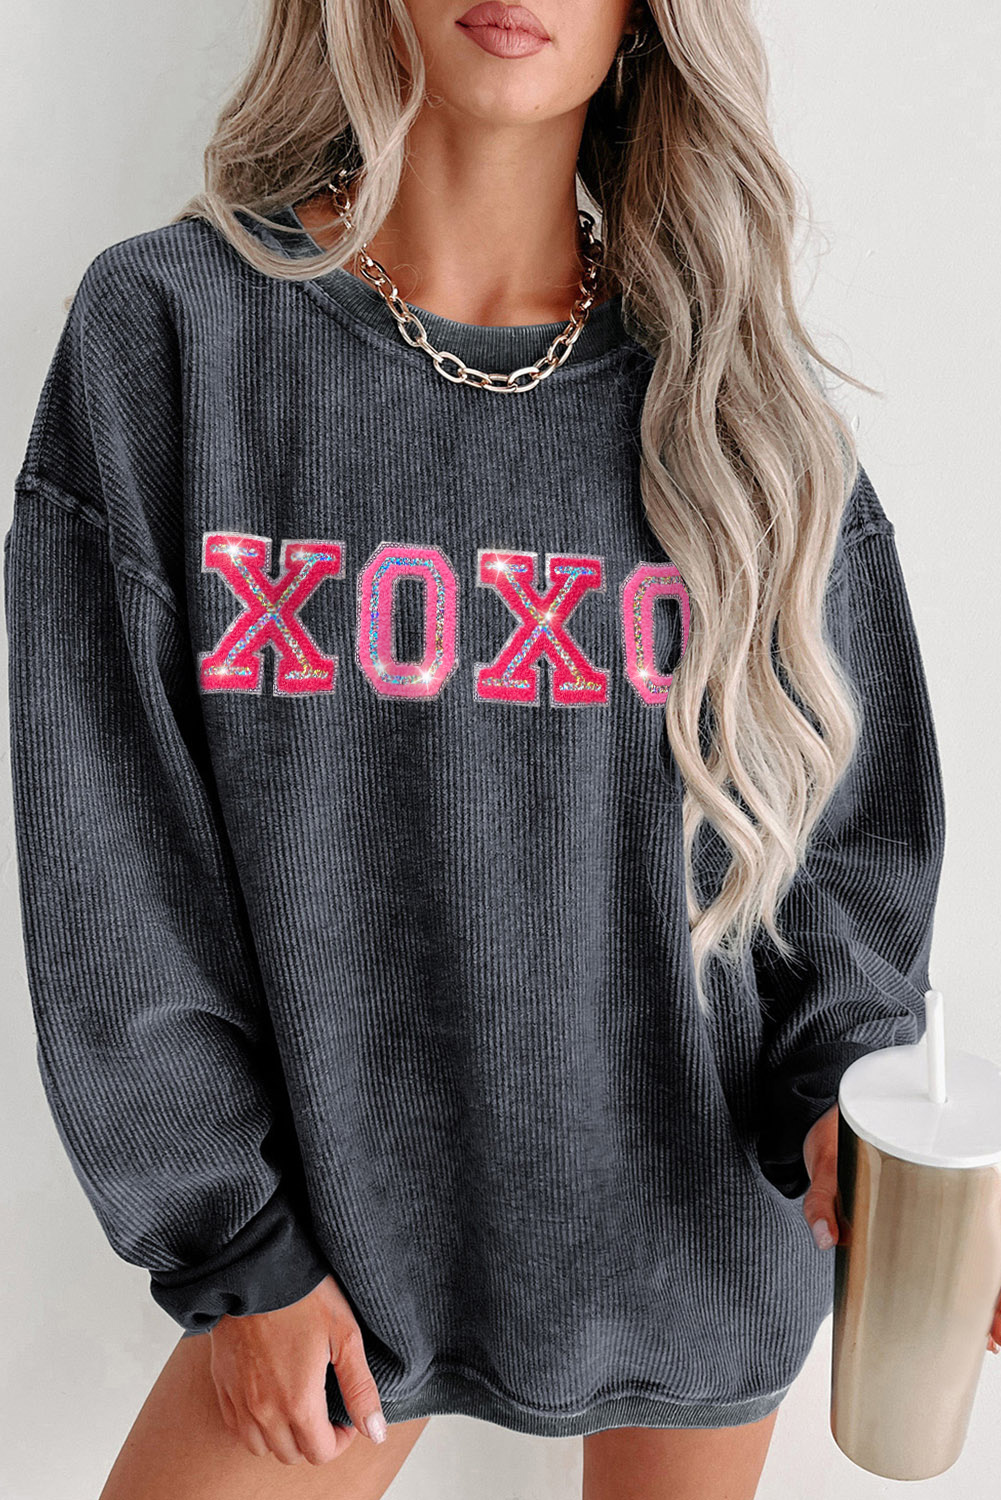  Gray Corded VALENTINE Sequin XOXO Graphic Sweatshirt